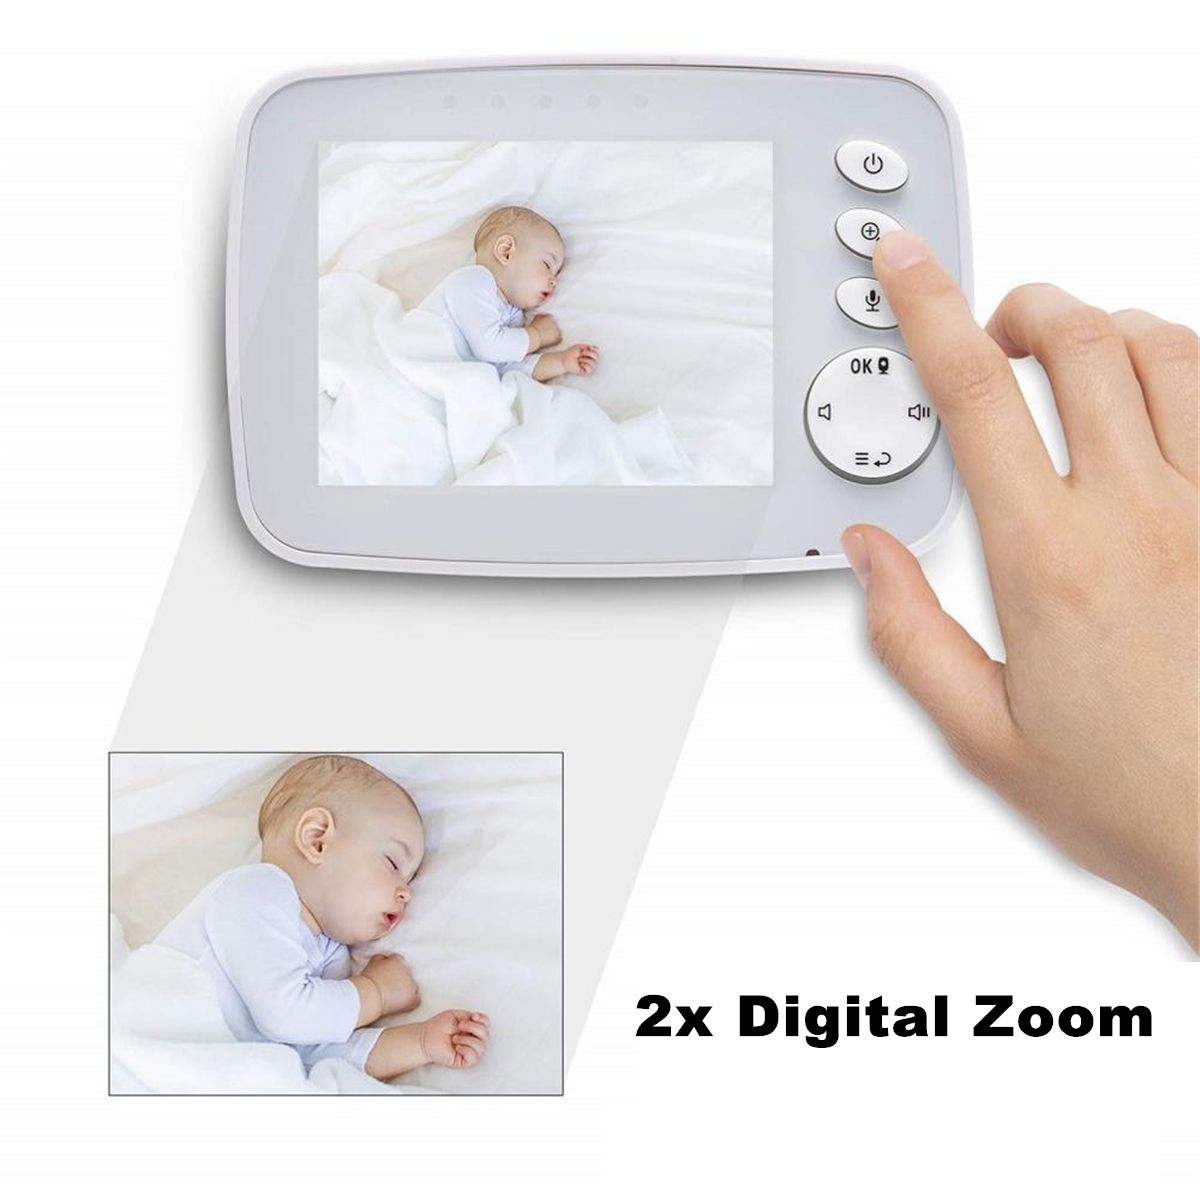 32-inch-LCD-Baby-Monitor-Nanny-Temperature-Monitoring-Lullaby-2-Way-Audio-IR-Night-Vision-Security-T-1563222